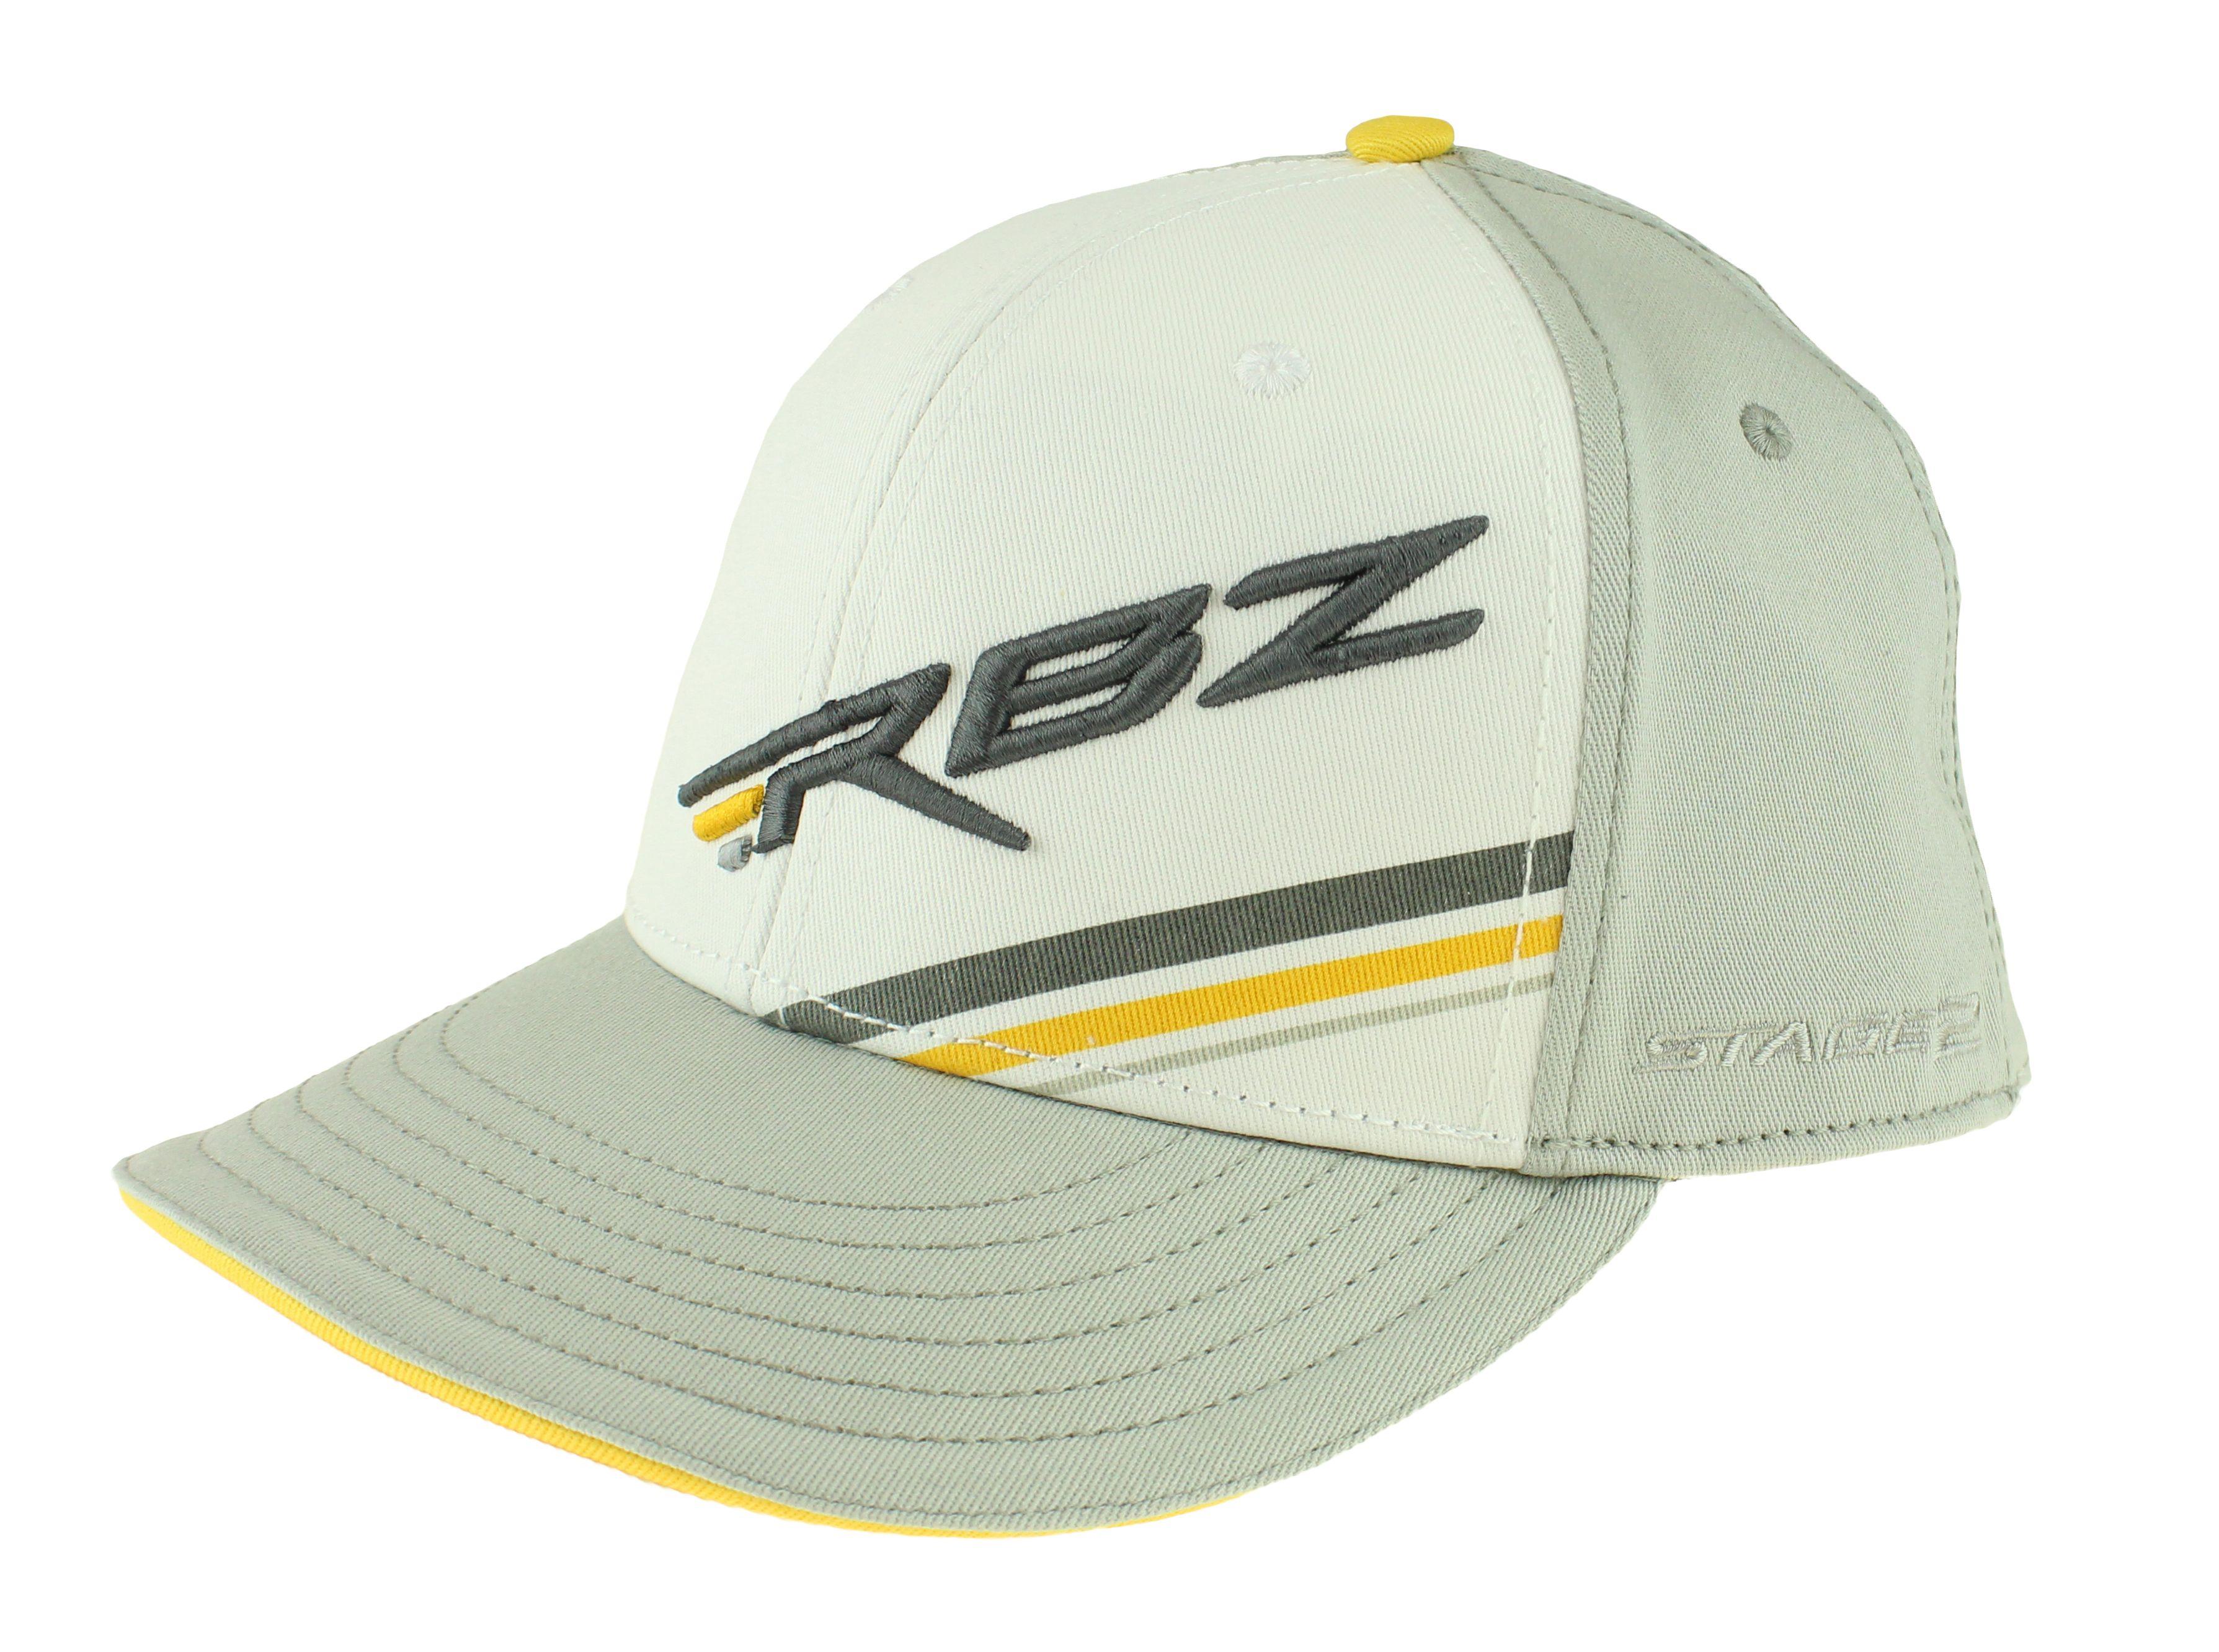 RBZ Logo - Details about TaylorMade Rocketballz RBZ Stage 2 Mens Flat Bill Golf Hat Cap, White